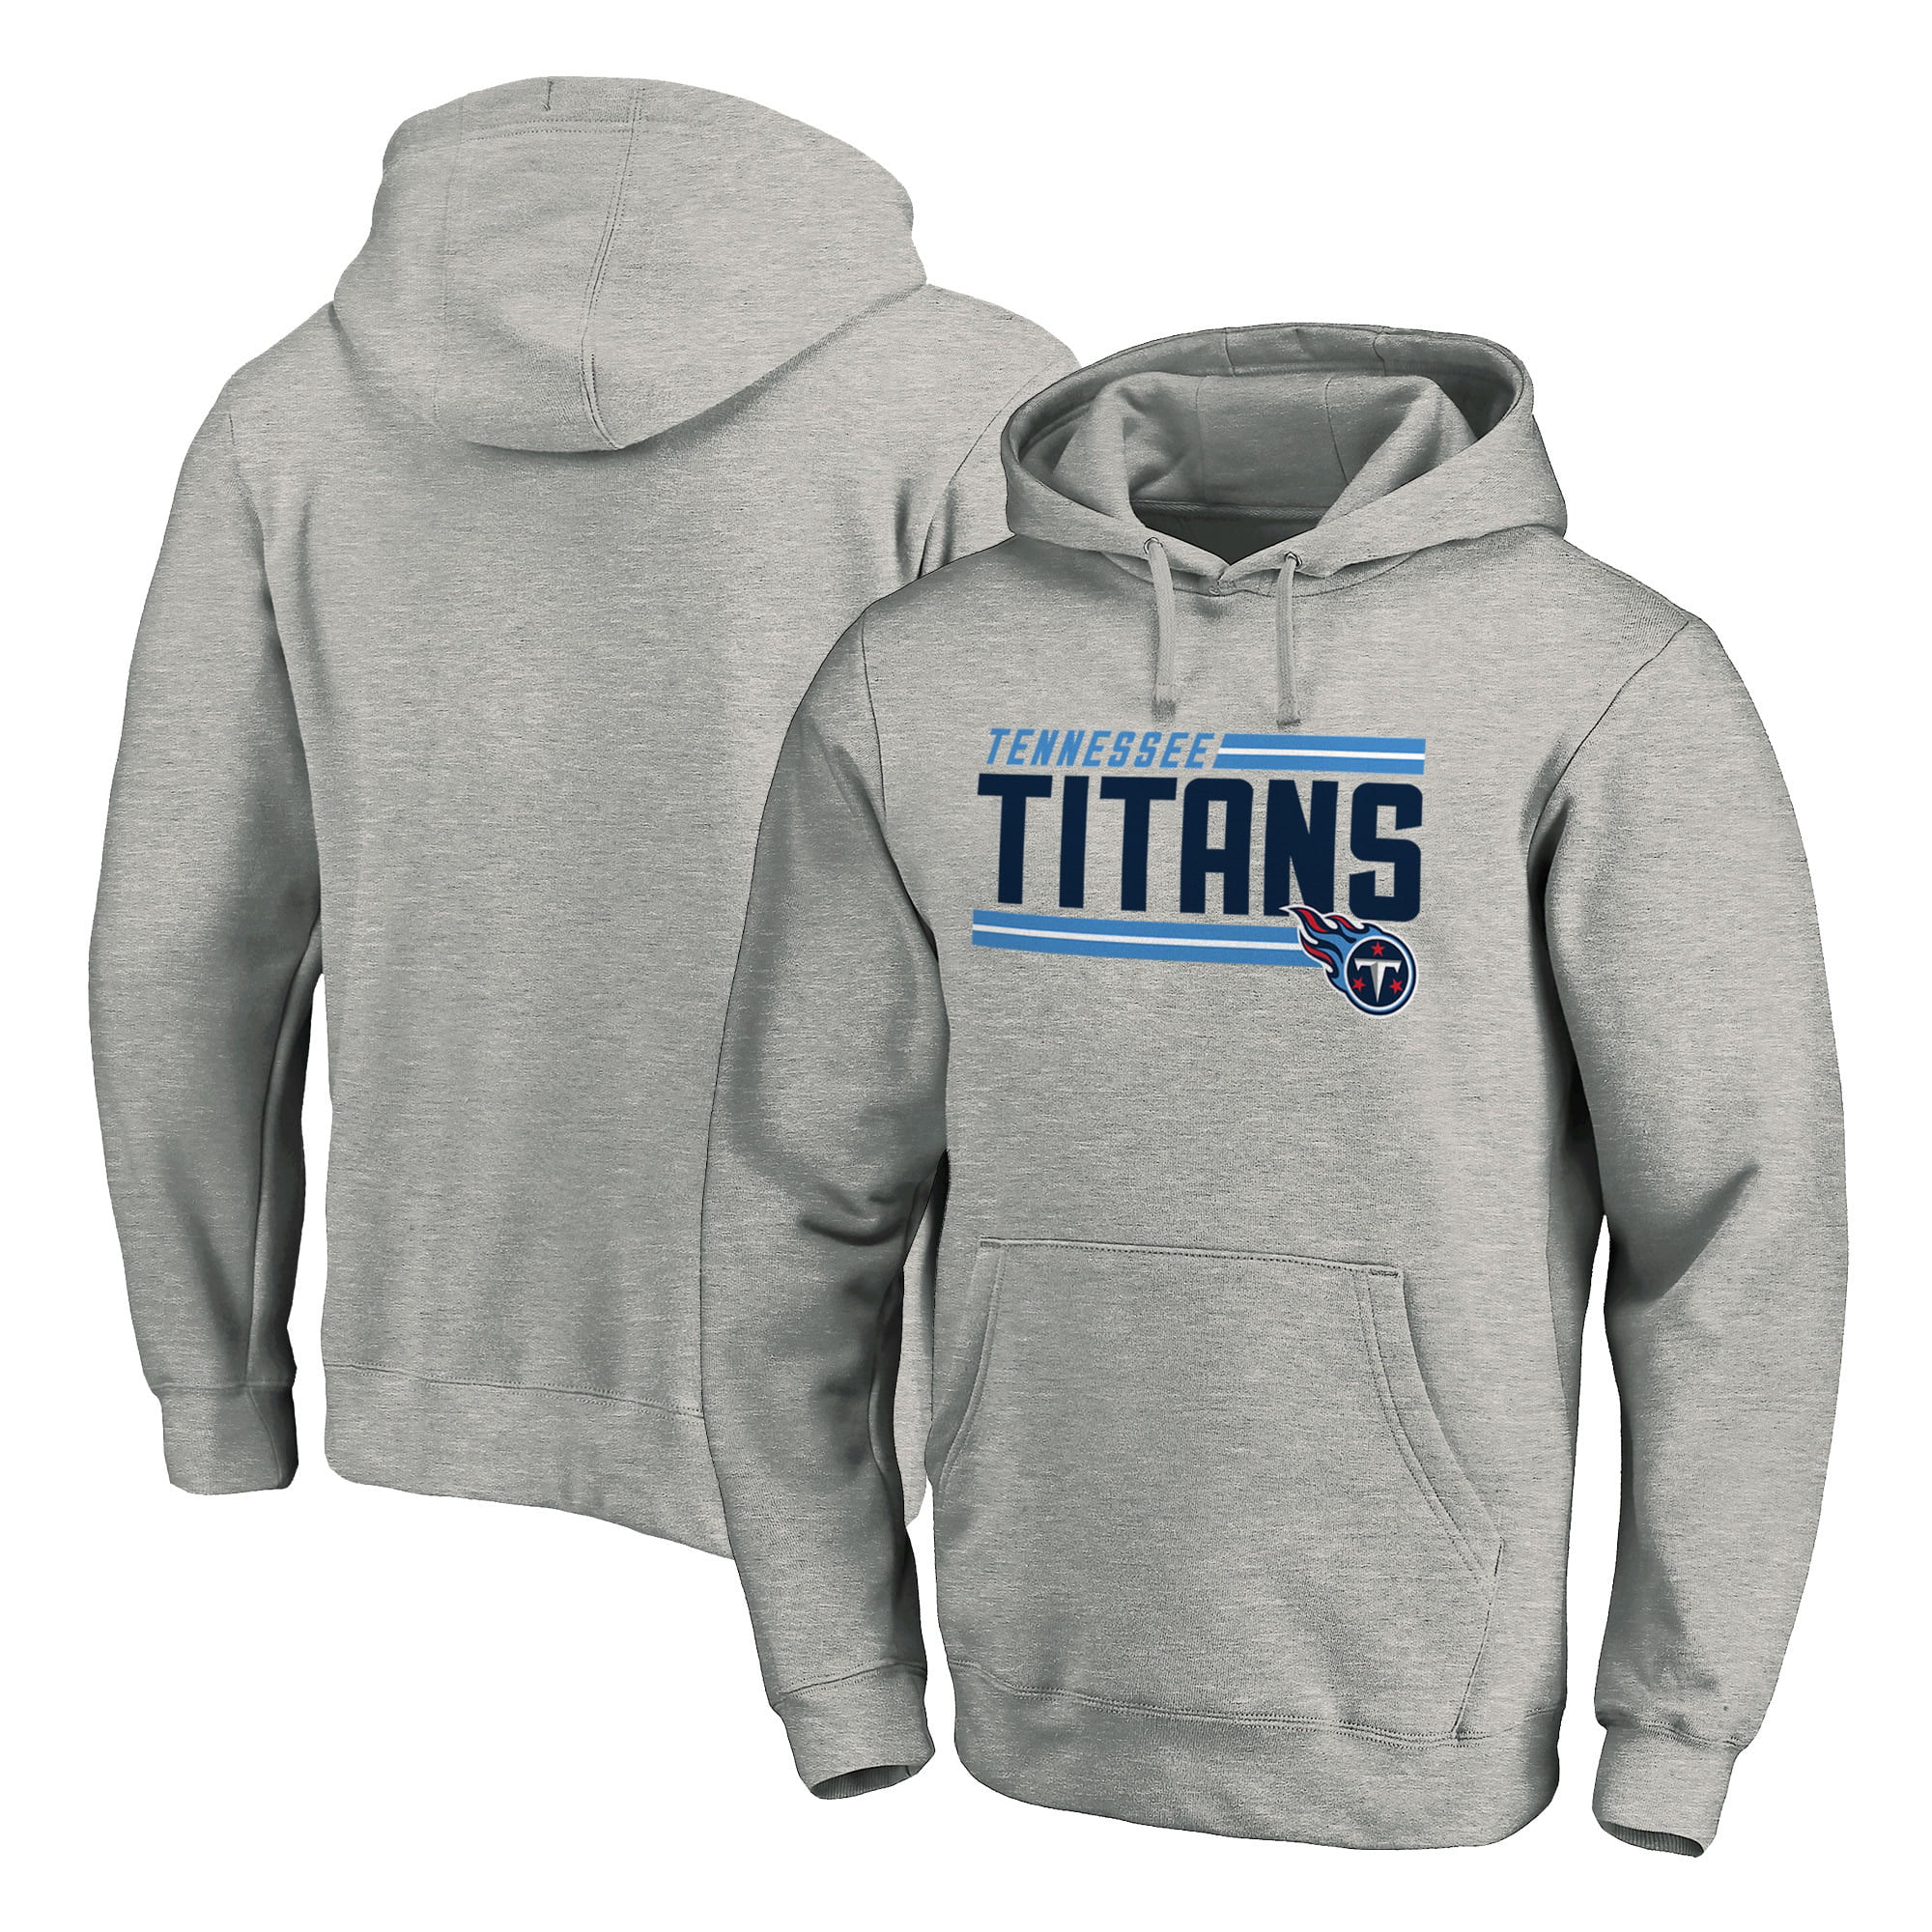 titans sweatshirts sale